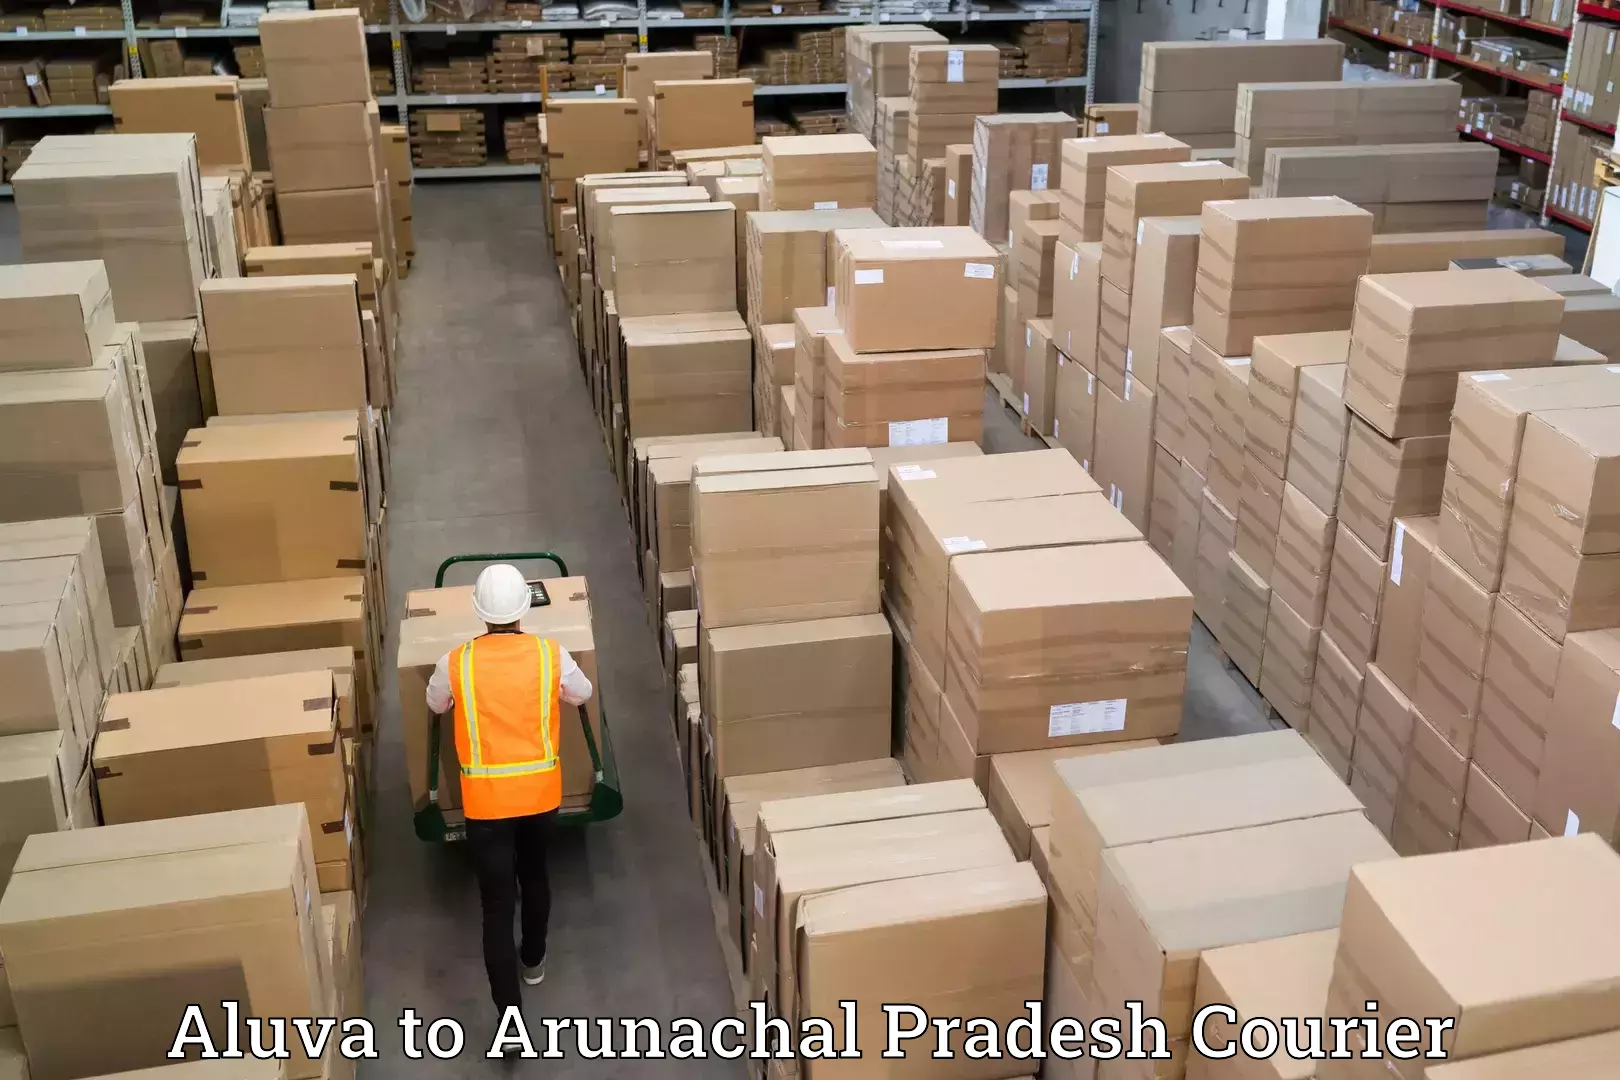 Trusted relocation experts Aluva to Arunachal Pradesh